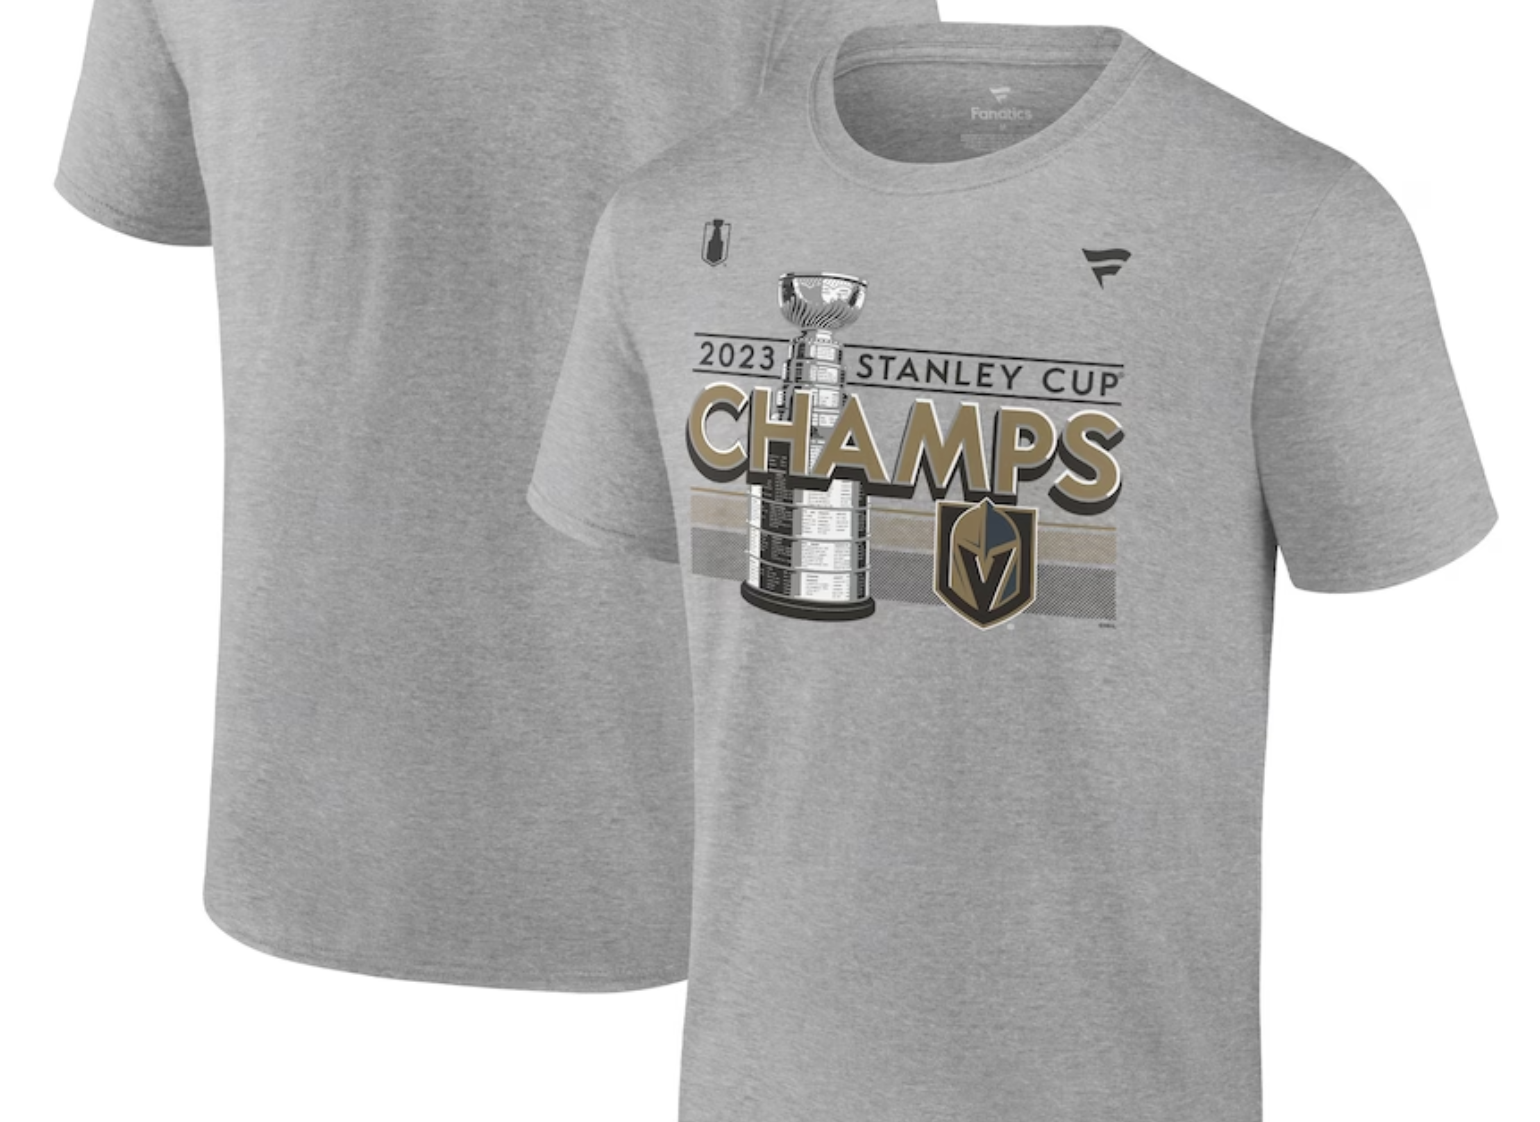 NHL Stanley Cup Merchandise, SC Playoffs Gear, NHL Postseason Apparel